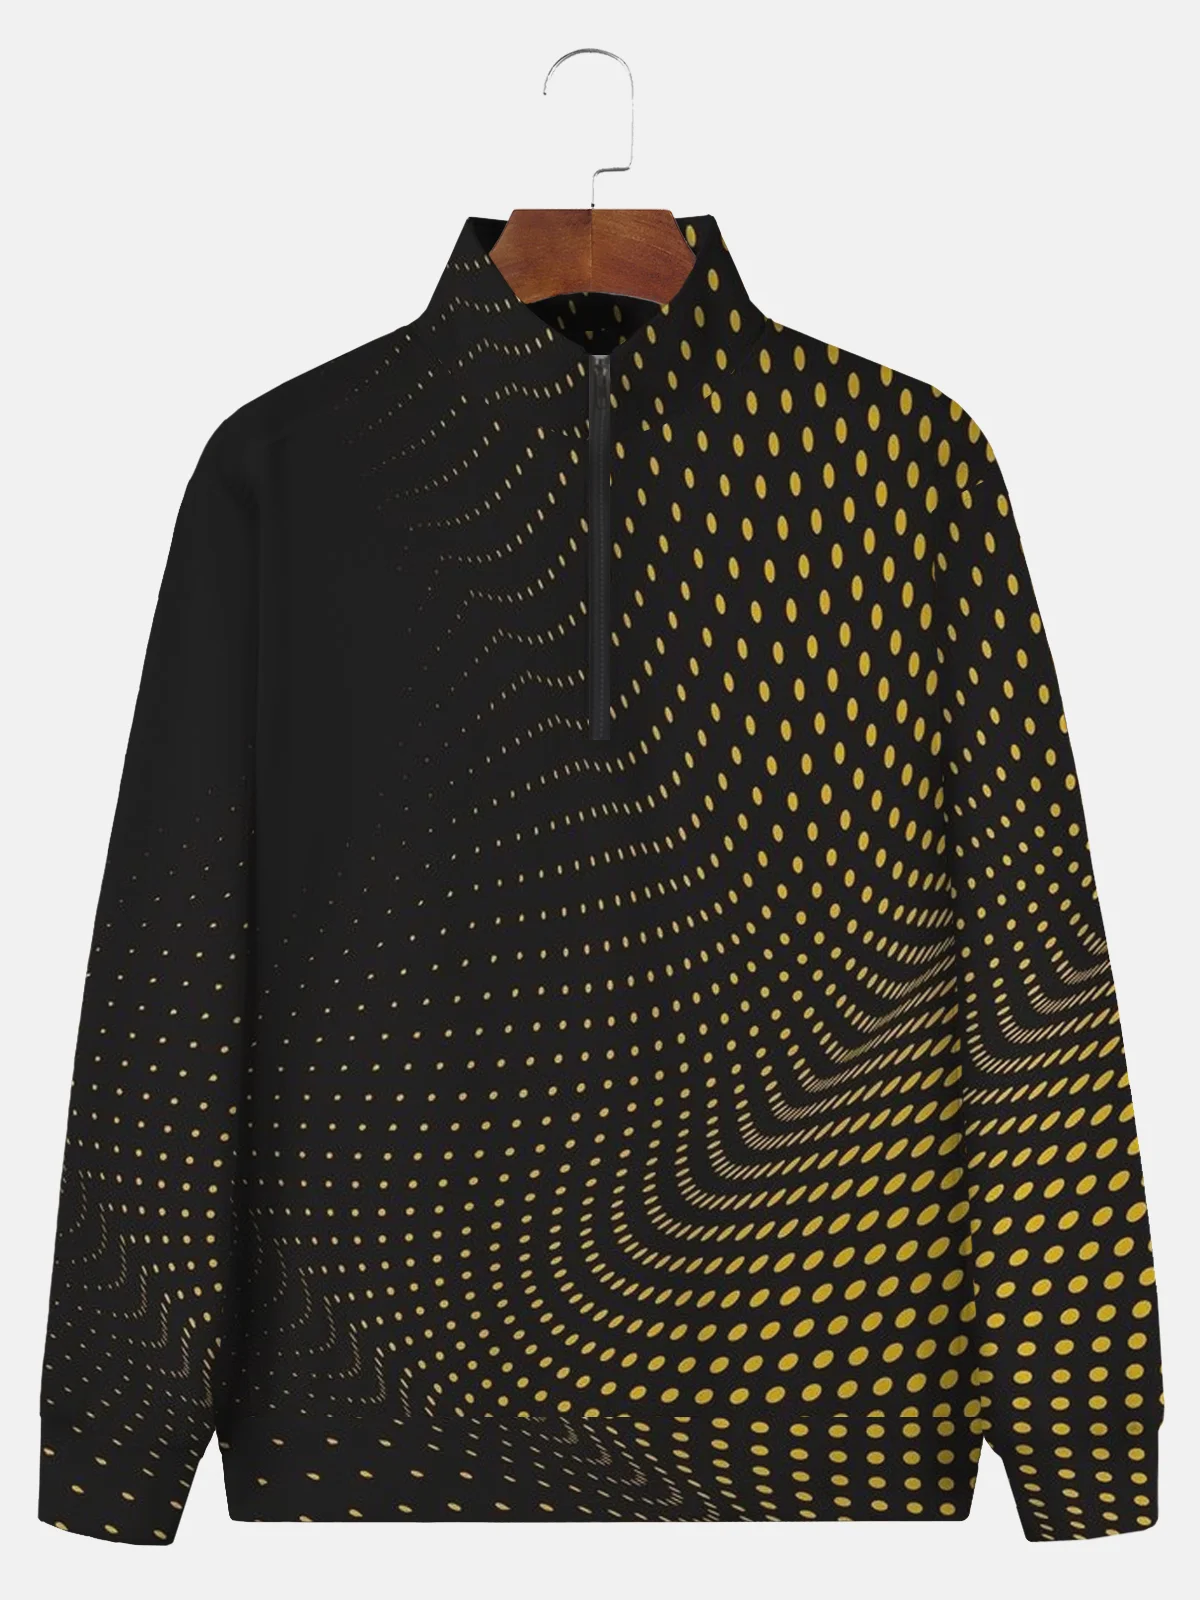 Royaura men's retro geometric polka dot oversized stand collar zipper sweatshirt